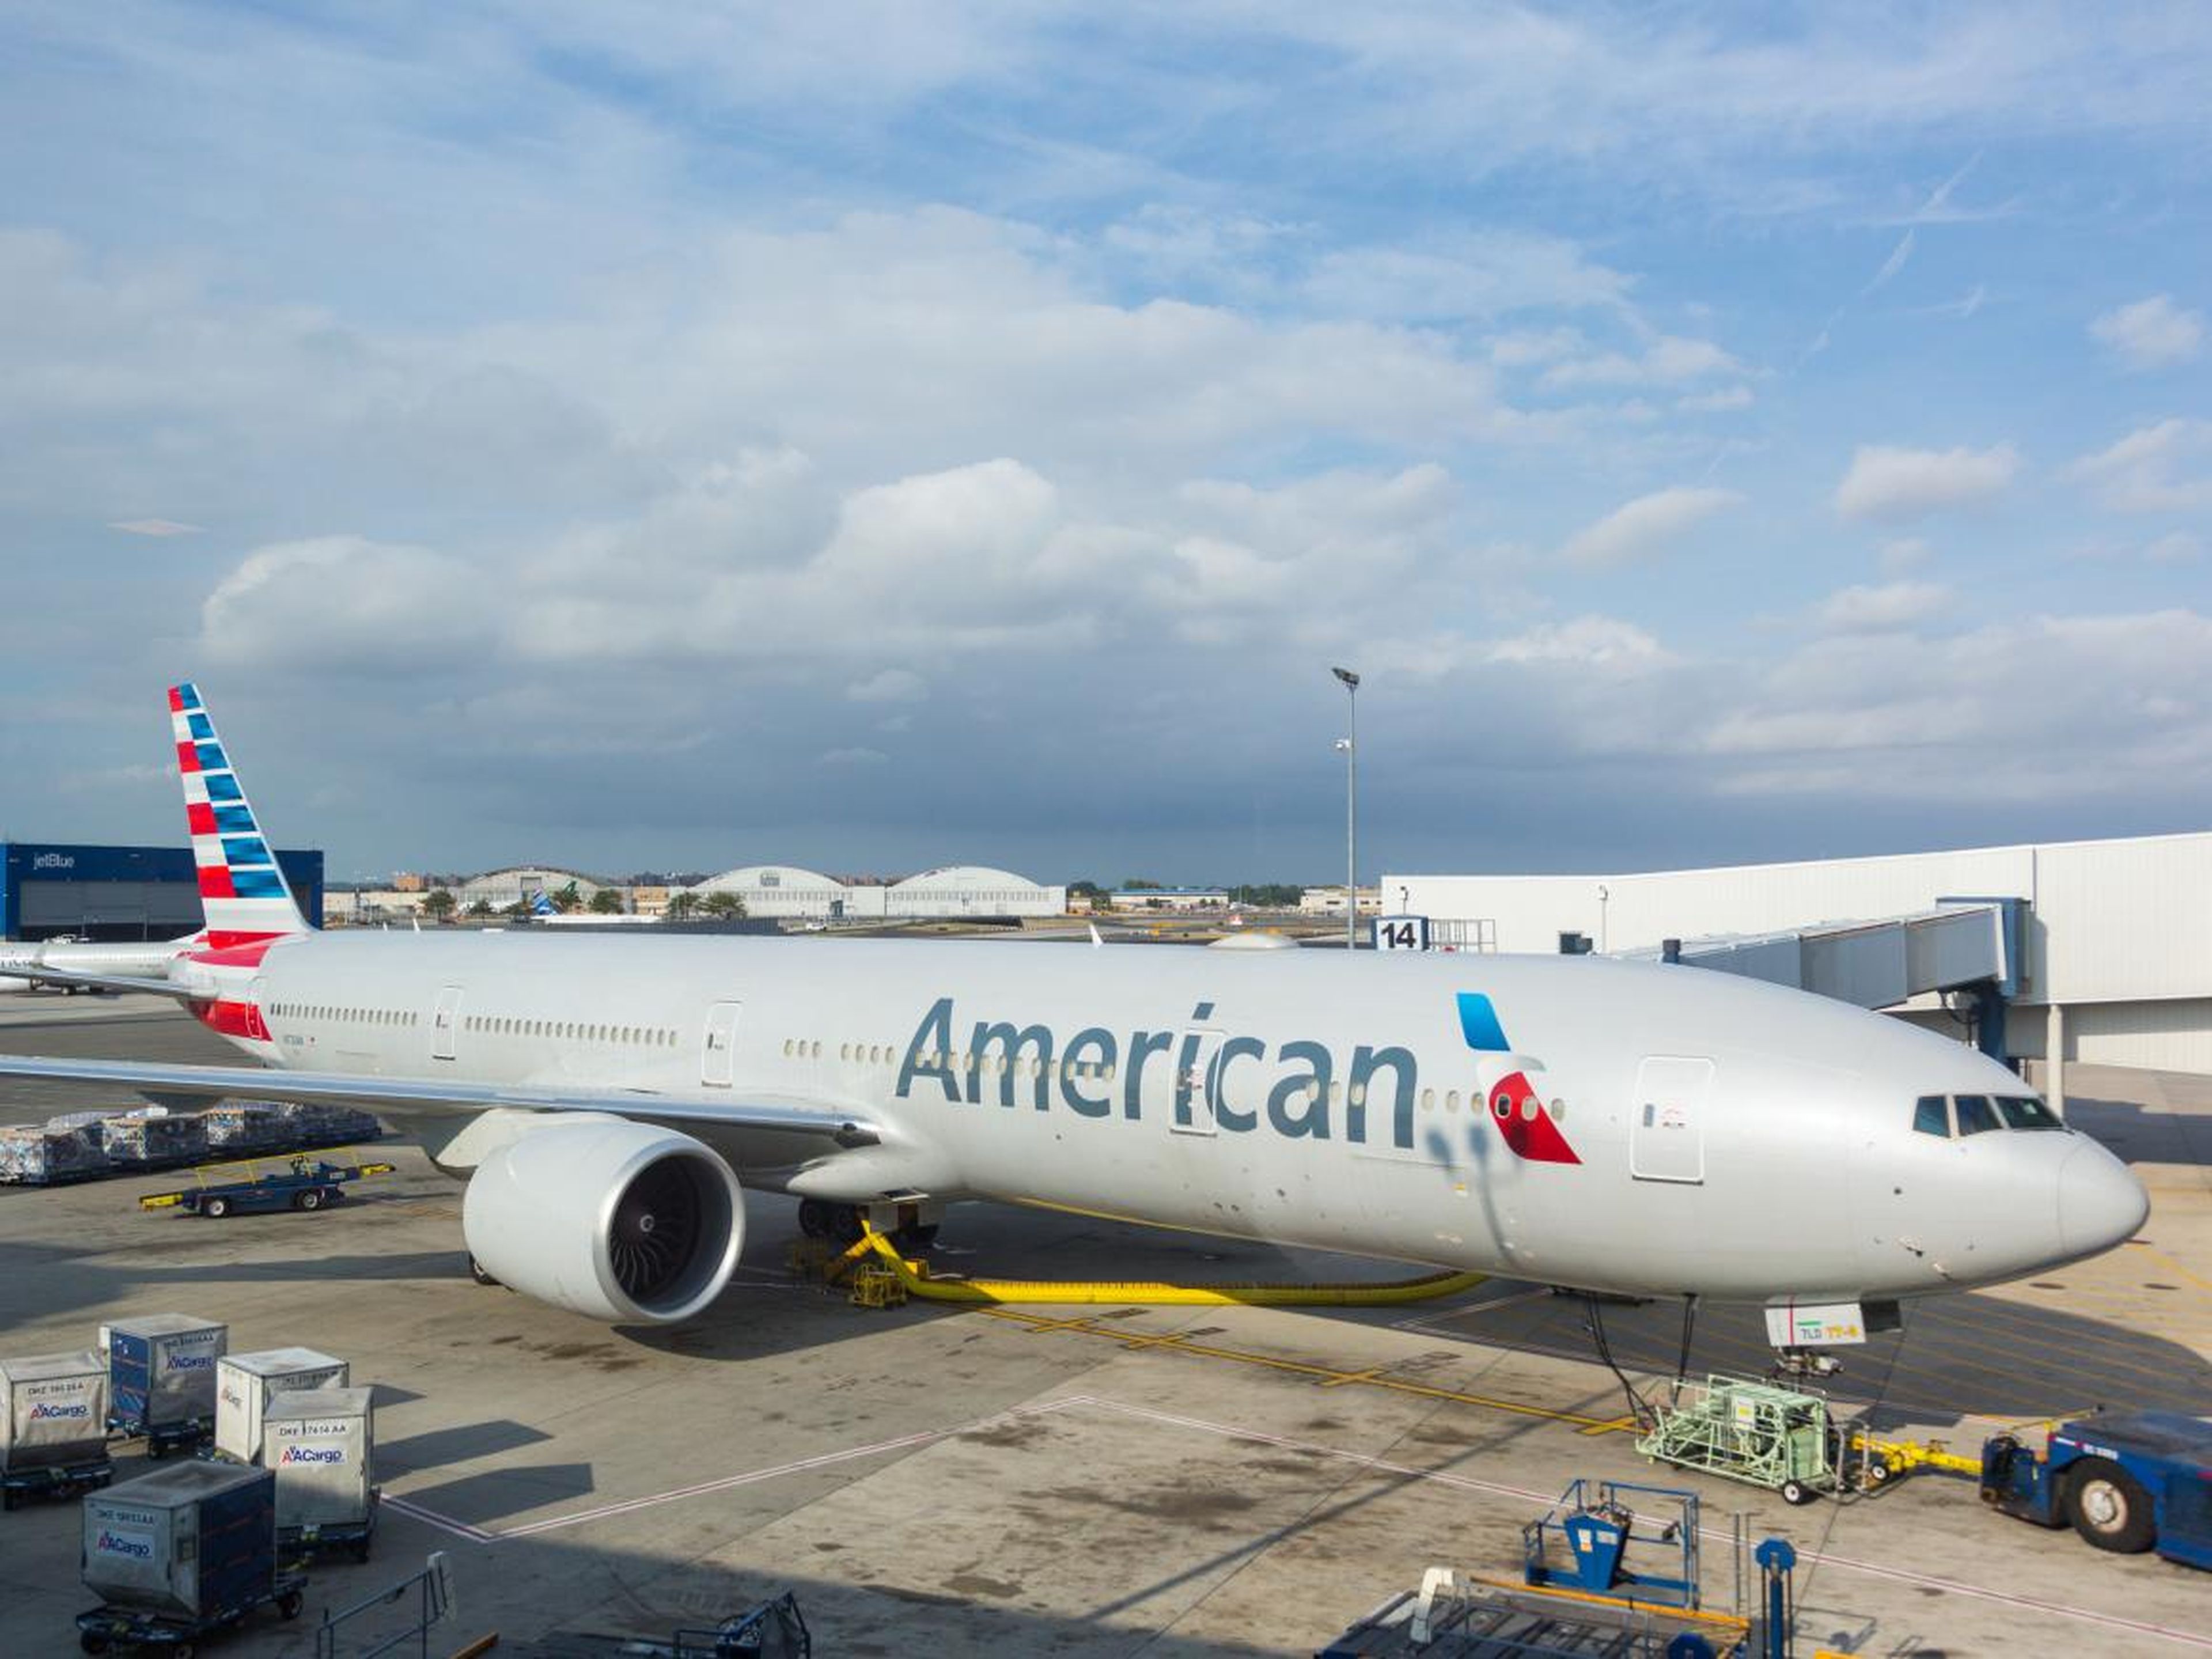 American Airlines Boeing 777 at New York JFK airport before boarding passengers.